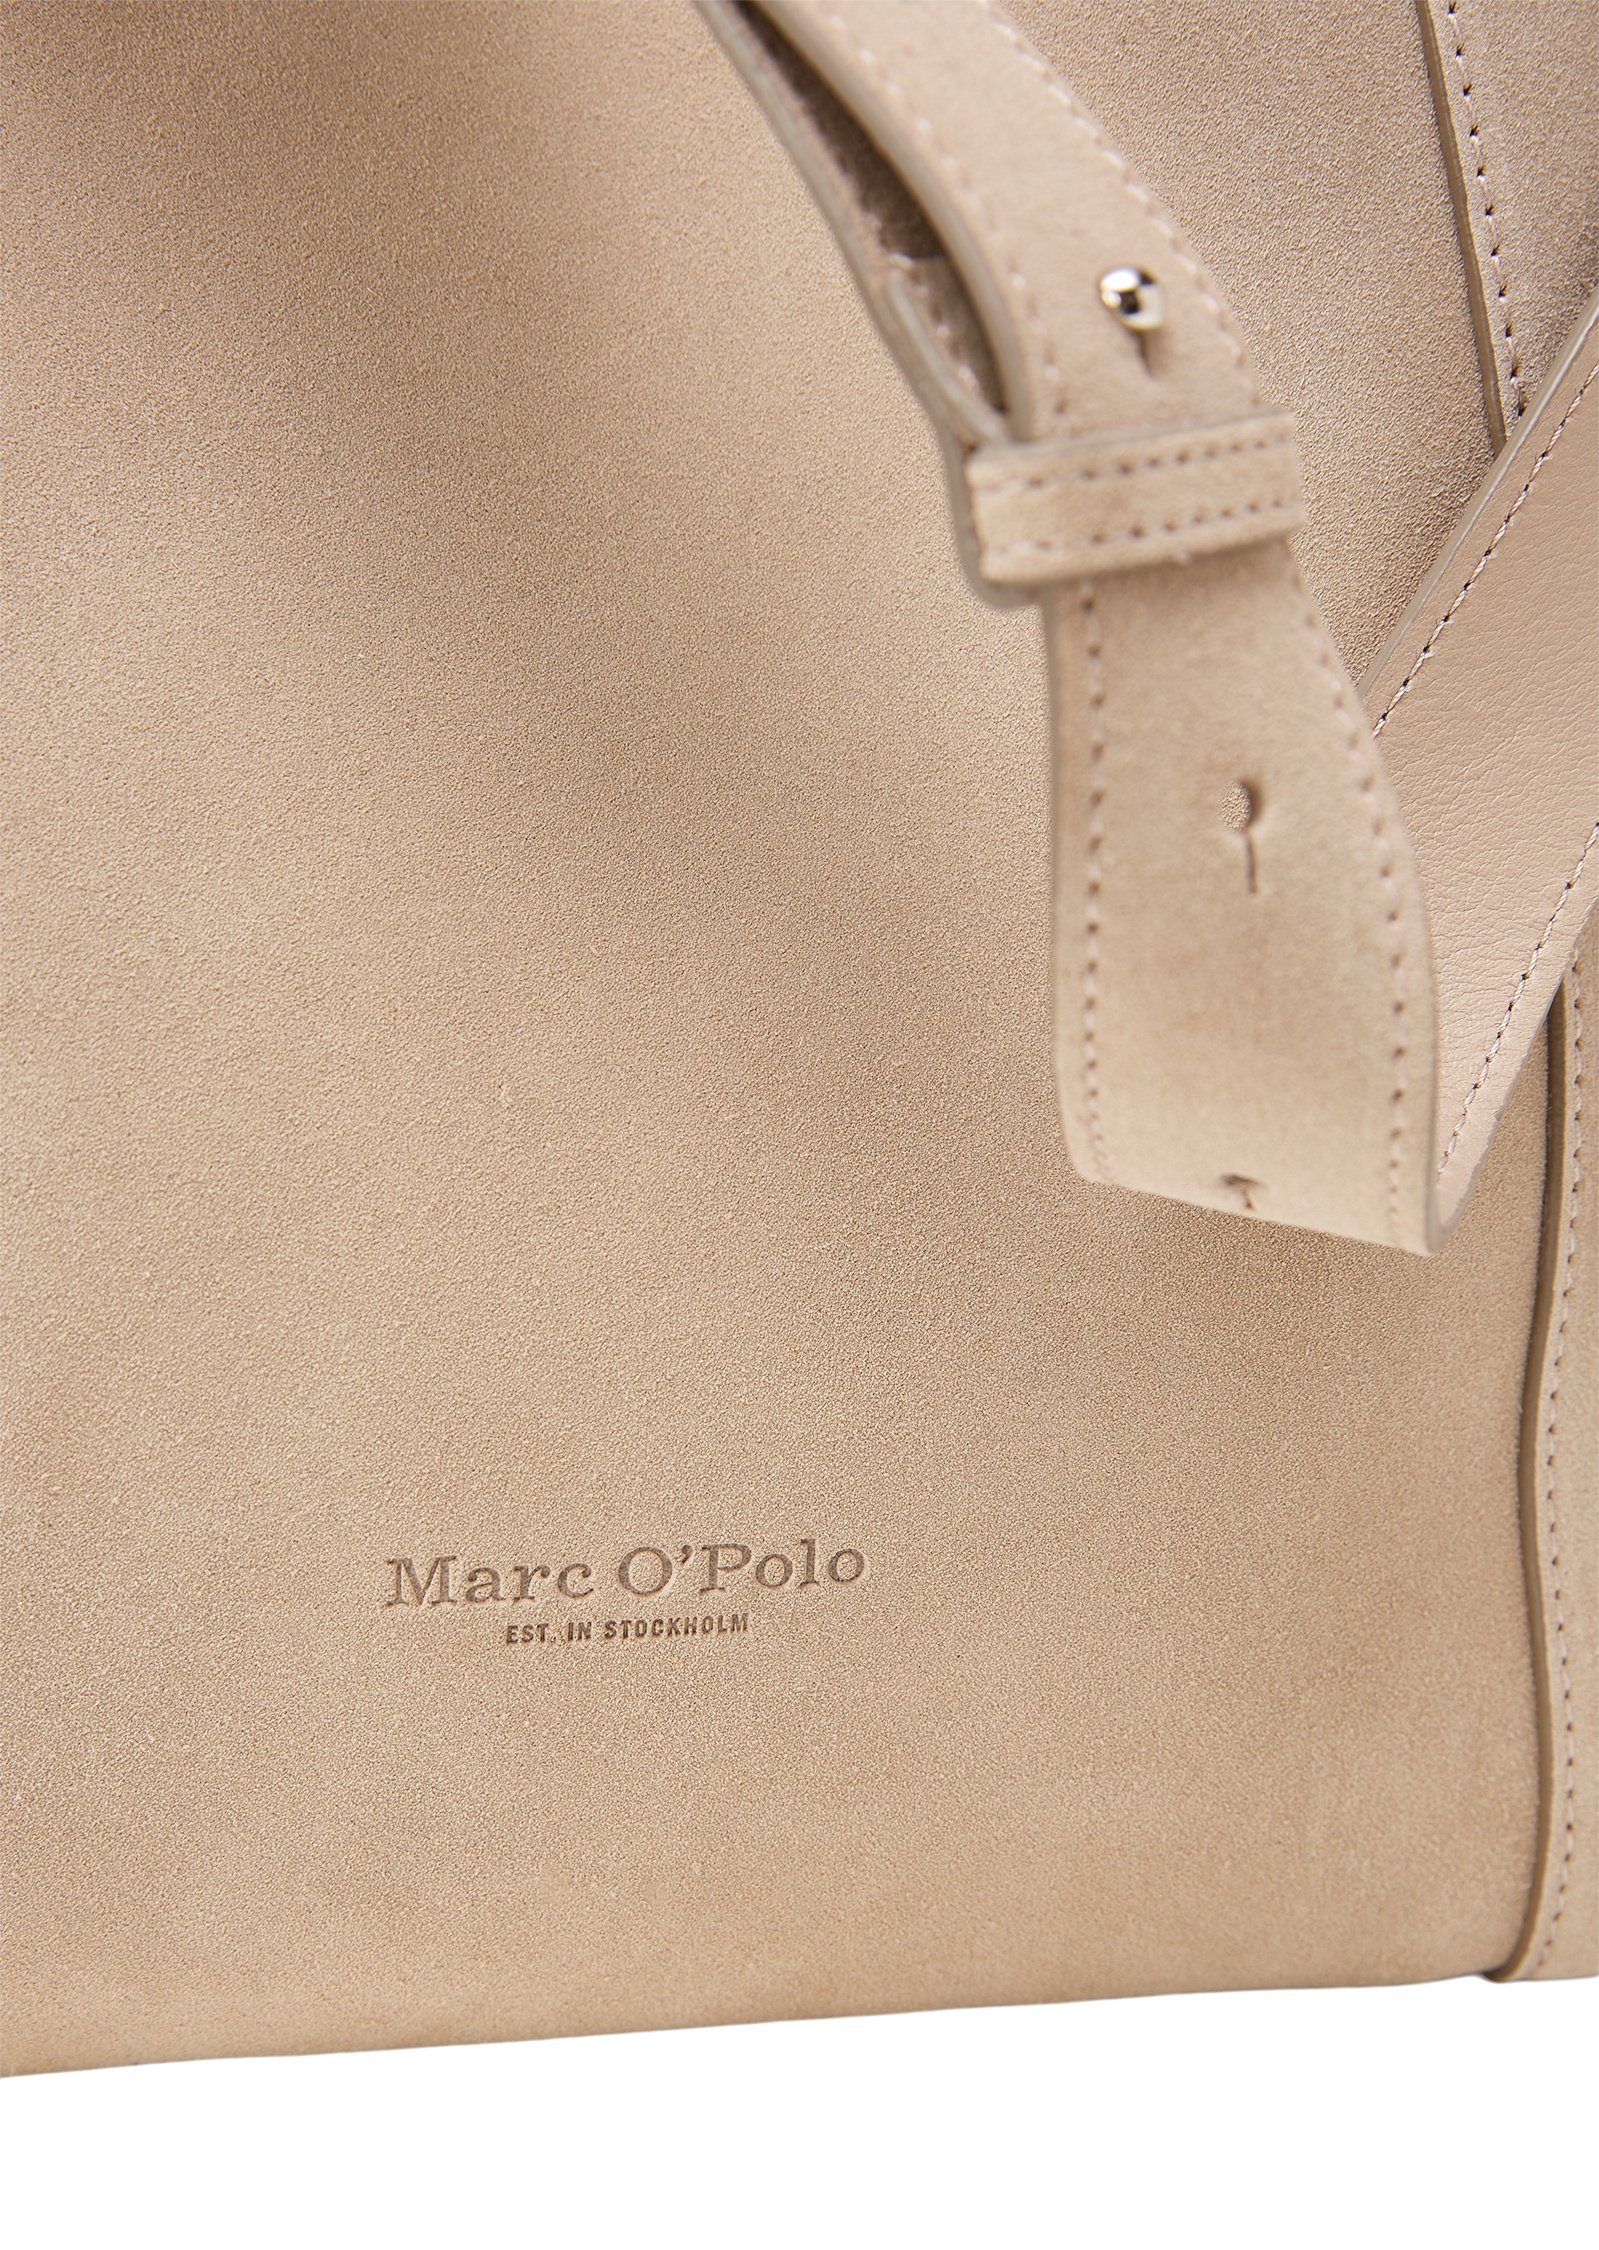 O'Polo Marc braun Umhängetasche Velours-Rindsleder softem aus